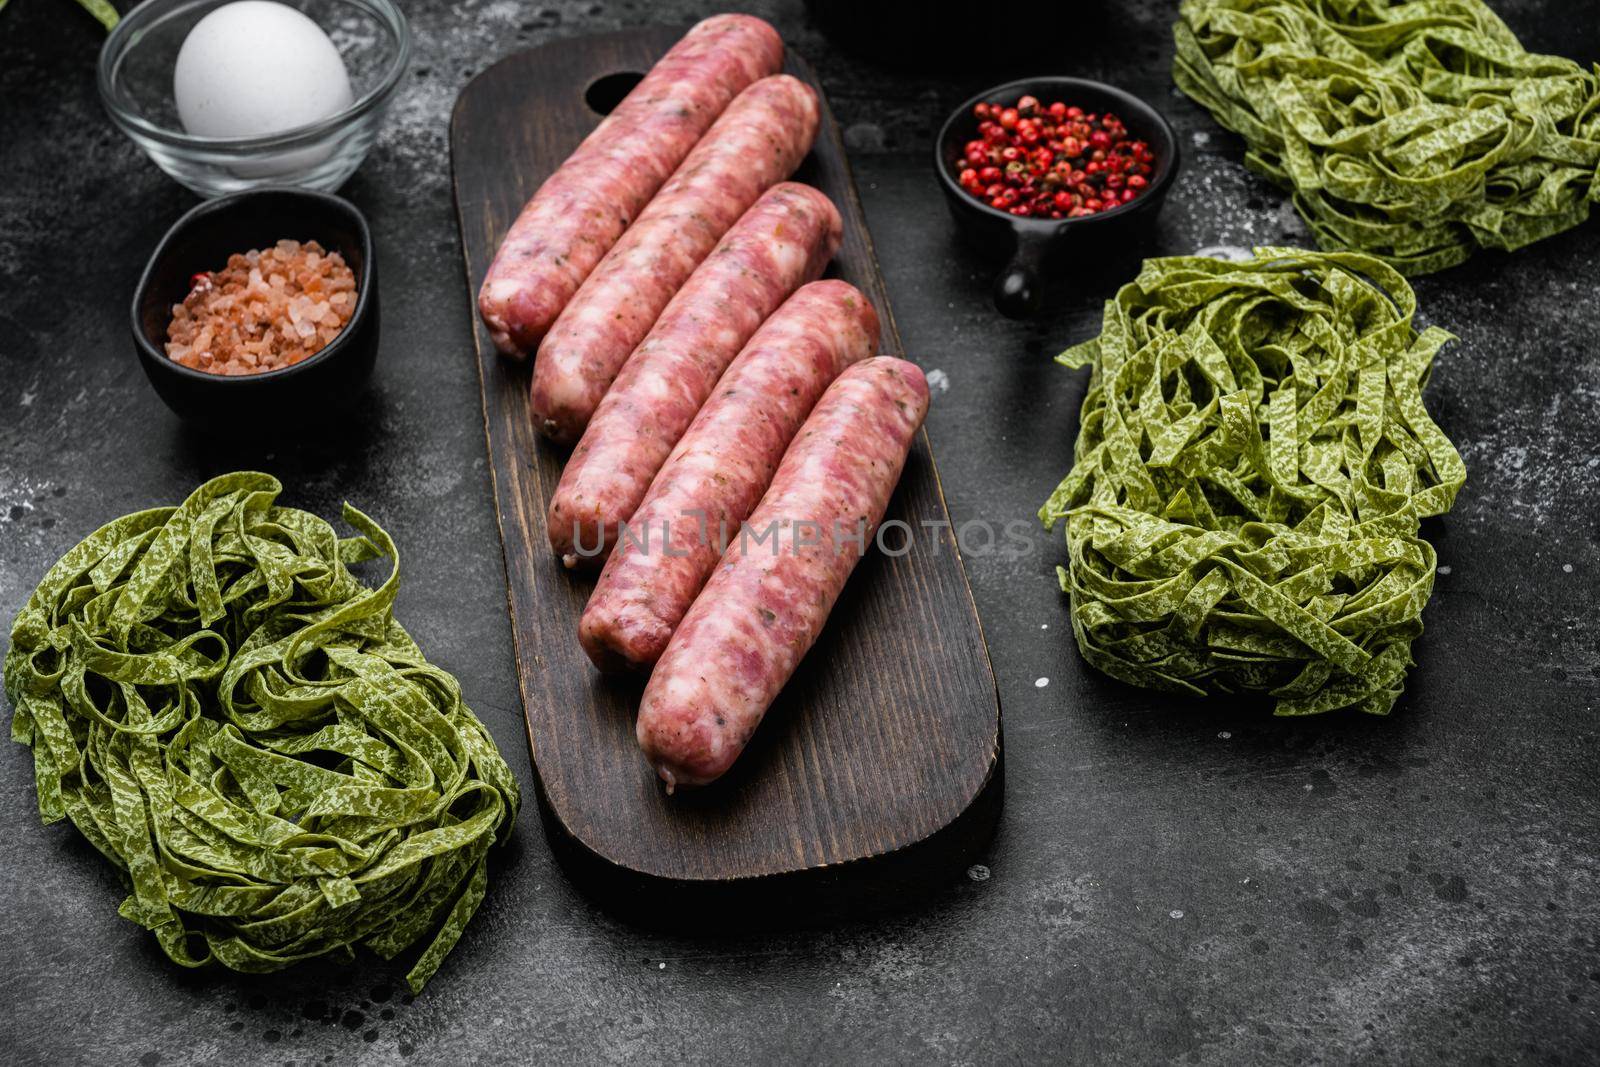 Italian cuisine food ingredients, on black dark stone table background by Ilianesolenyi